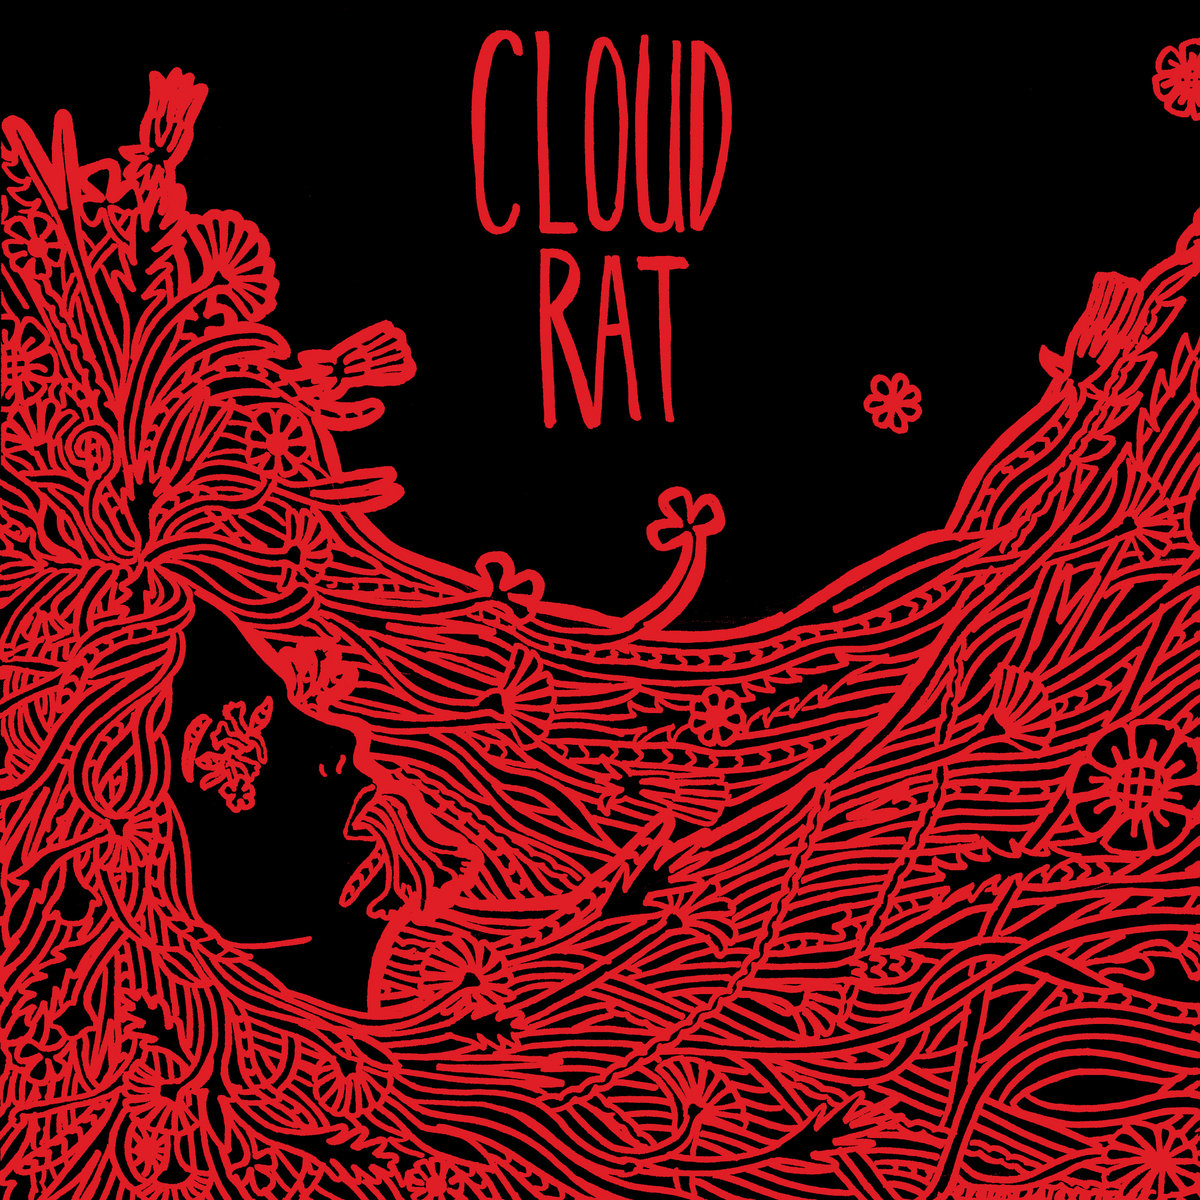 Redux 2022. Cloud rat Band. Cloud rat pollinator. Cloud rat Band 2010. Clod Remaster.